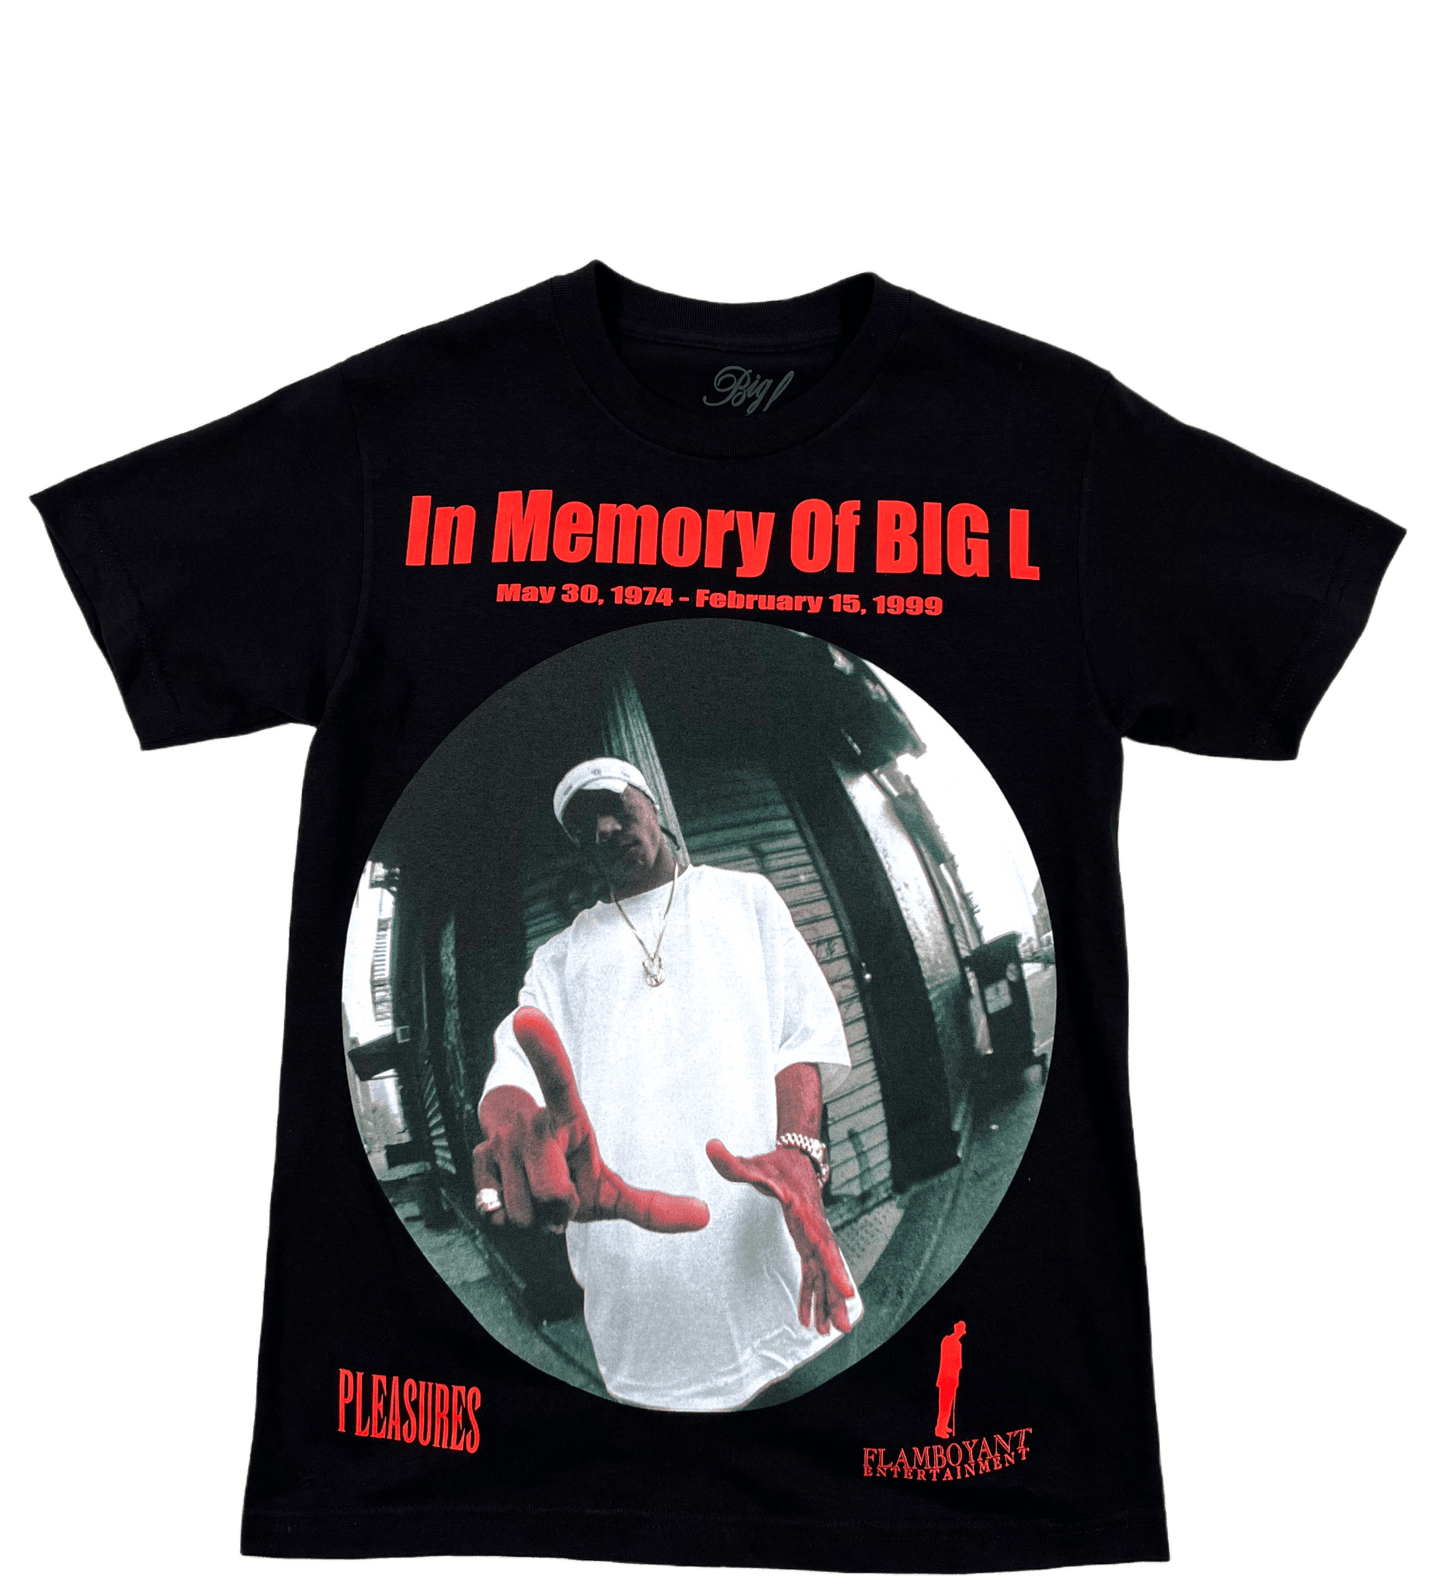 In memory of Big L PLEASURES official licensed t-shirt.